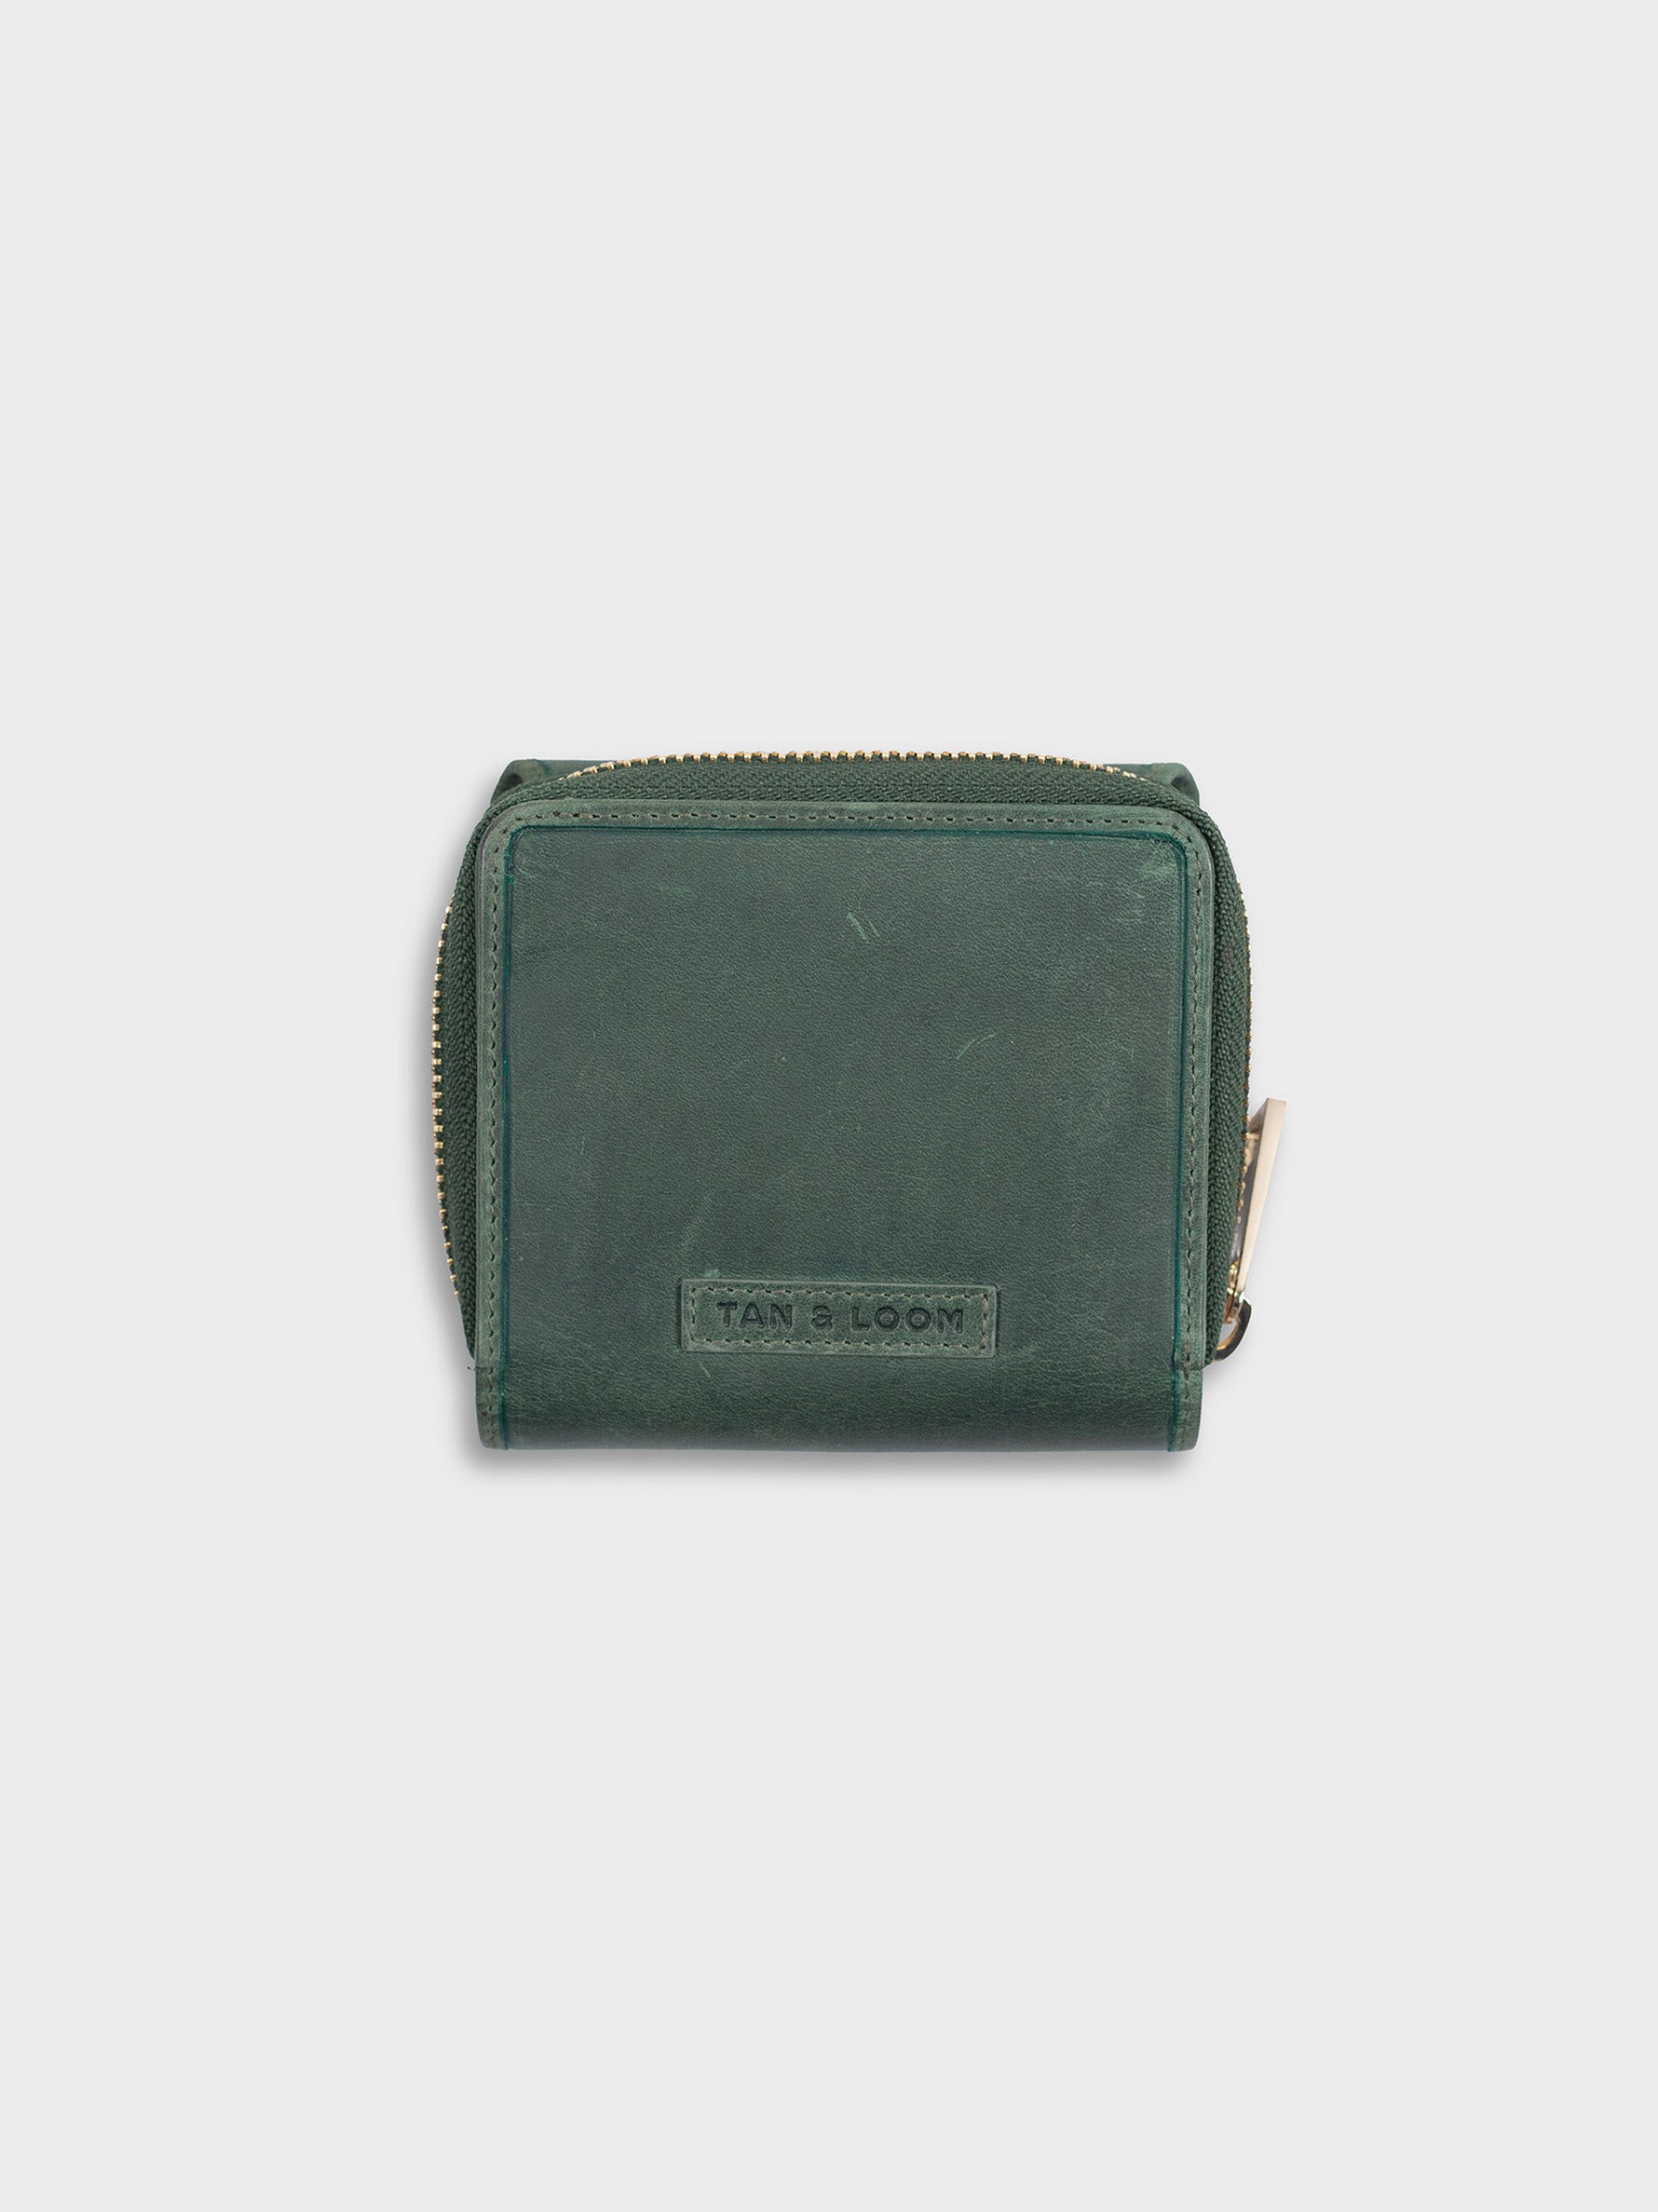 VEGAN Leather RFID Protected Sea Green Metallic Zipper Wallet Purse Money  Bag For Women at Rs 300/piece | Uttarpara Kotrung | ID: 2851264686930